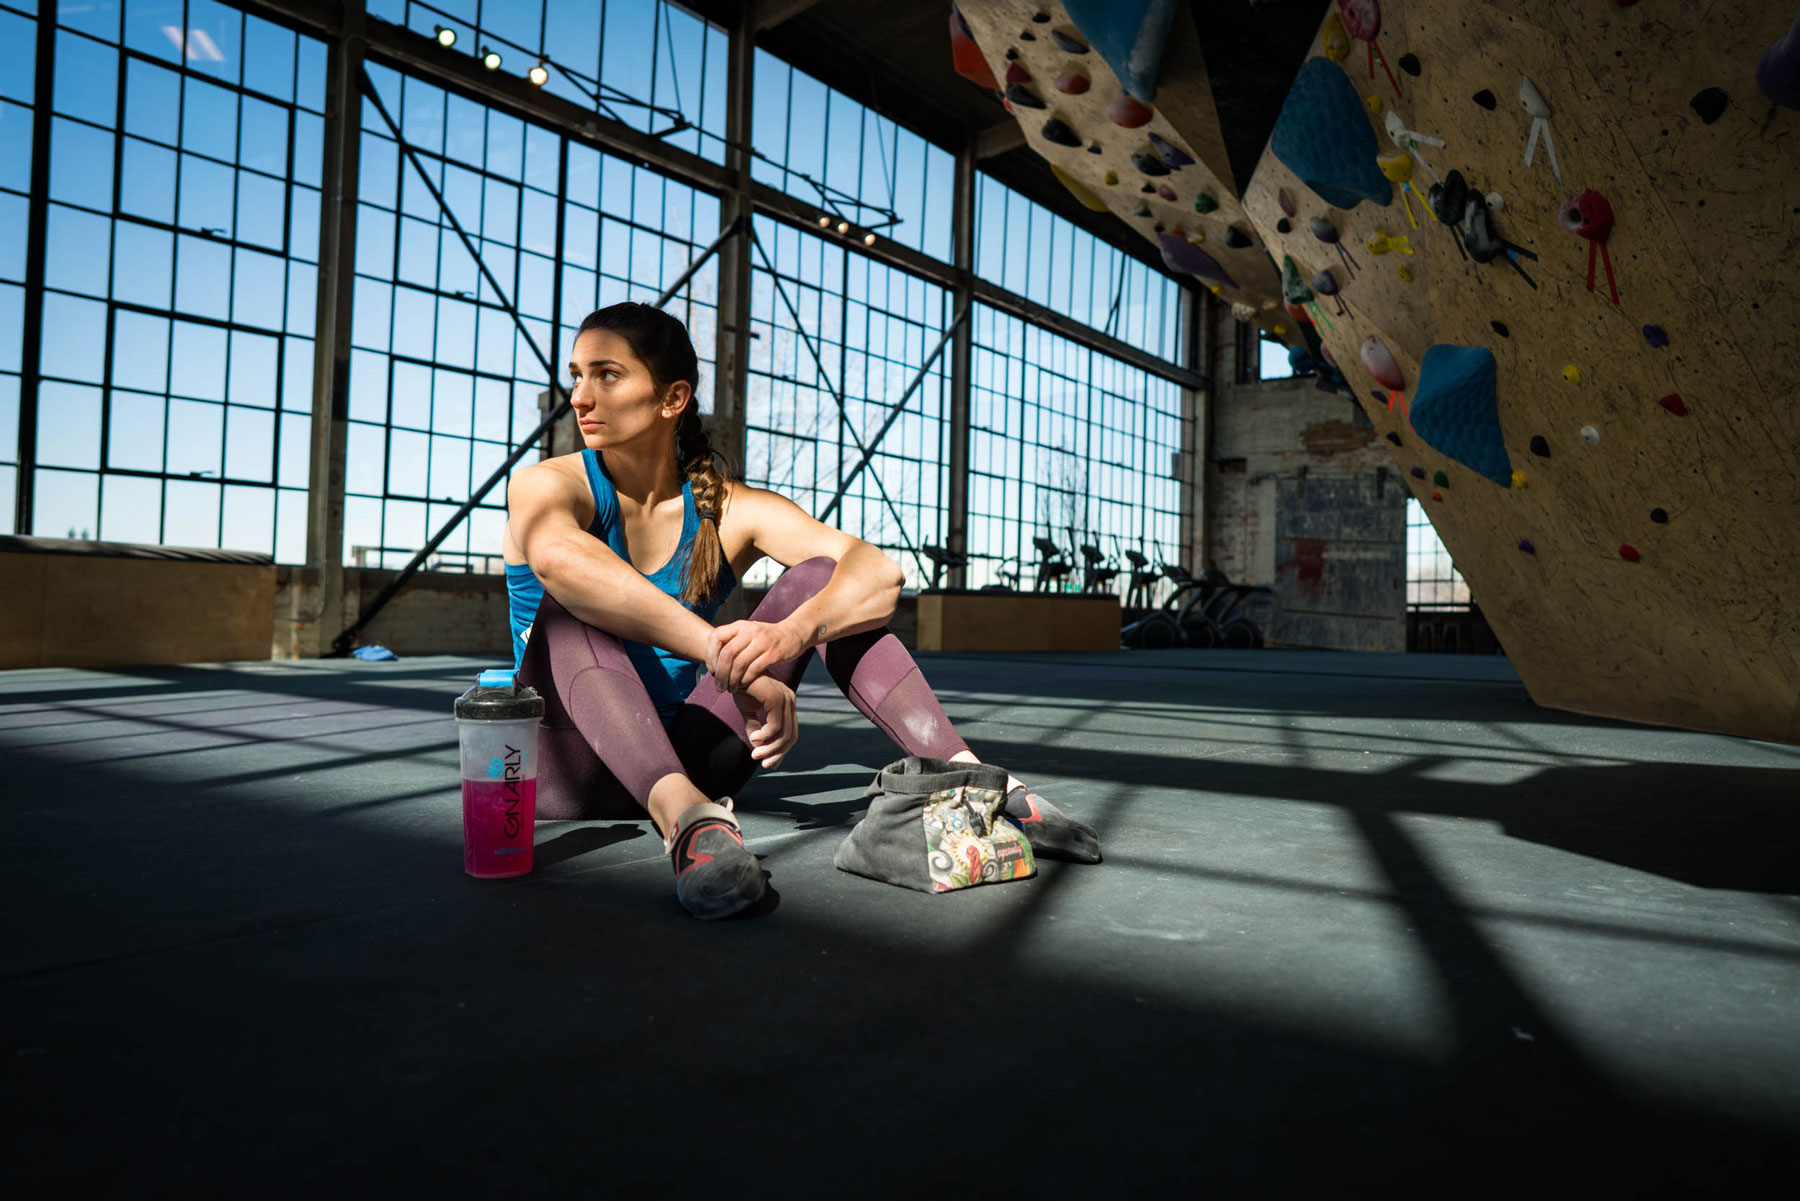 https://www.climbingbusinessjournal.com/wp-content/uploads/Gnarly-athlete-Kyra-Condie-photo-by-Savannah-Cummins.jpg